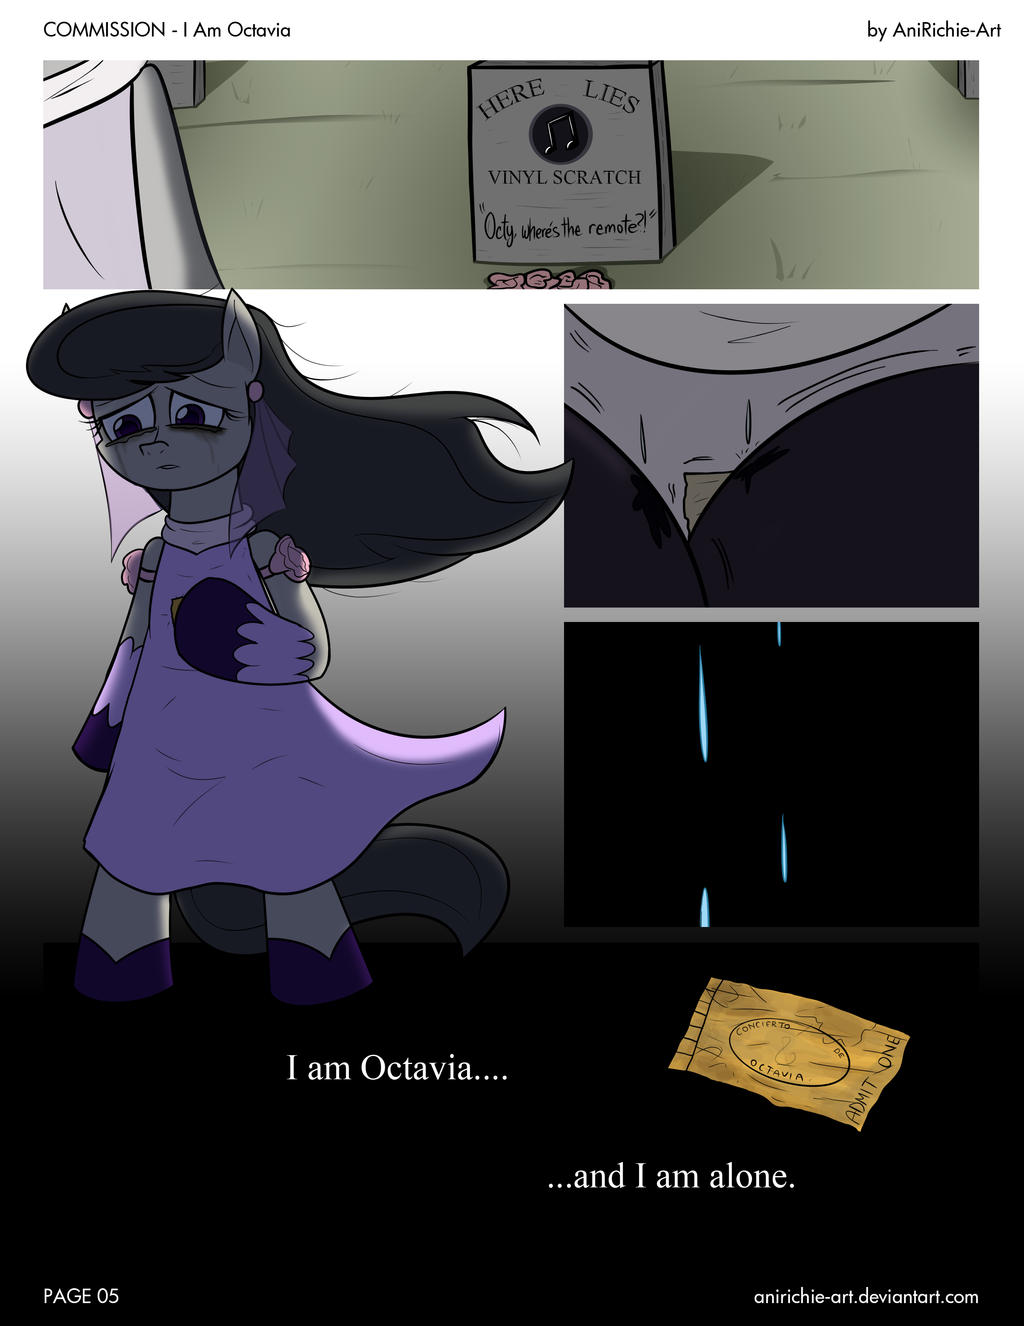 Encore: I am Octavia - PAGE 05 (COMIC)